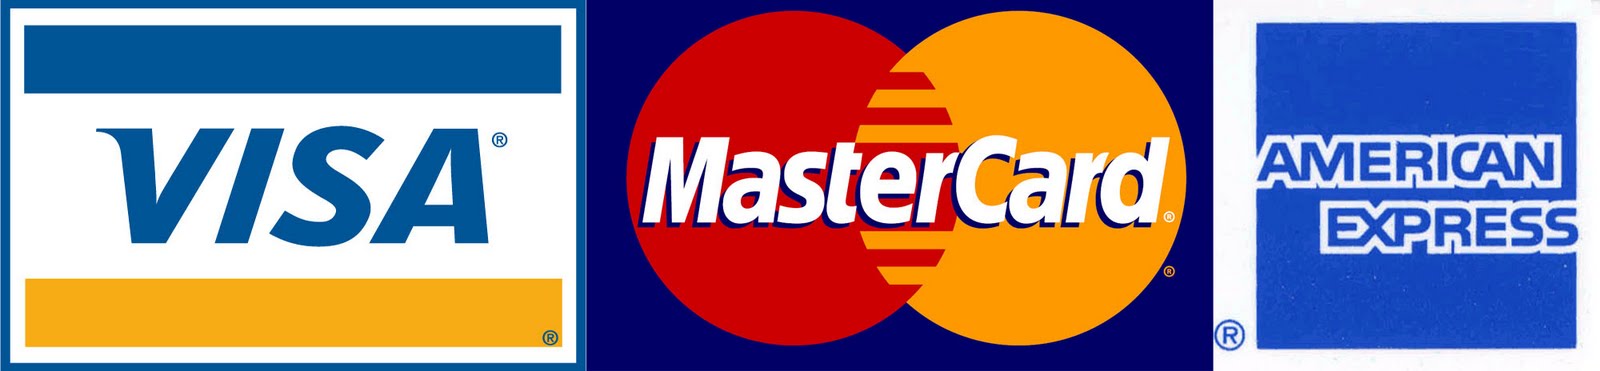 credit card logos eps. hairstyles credit card logos